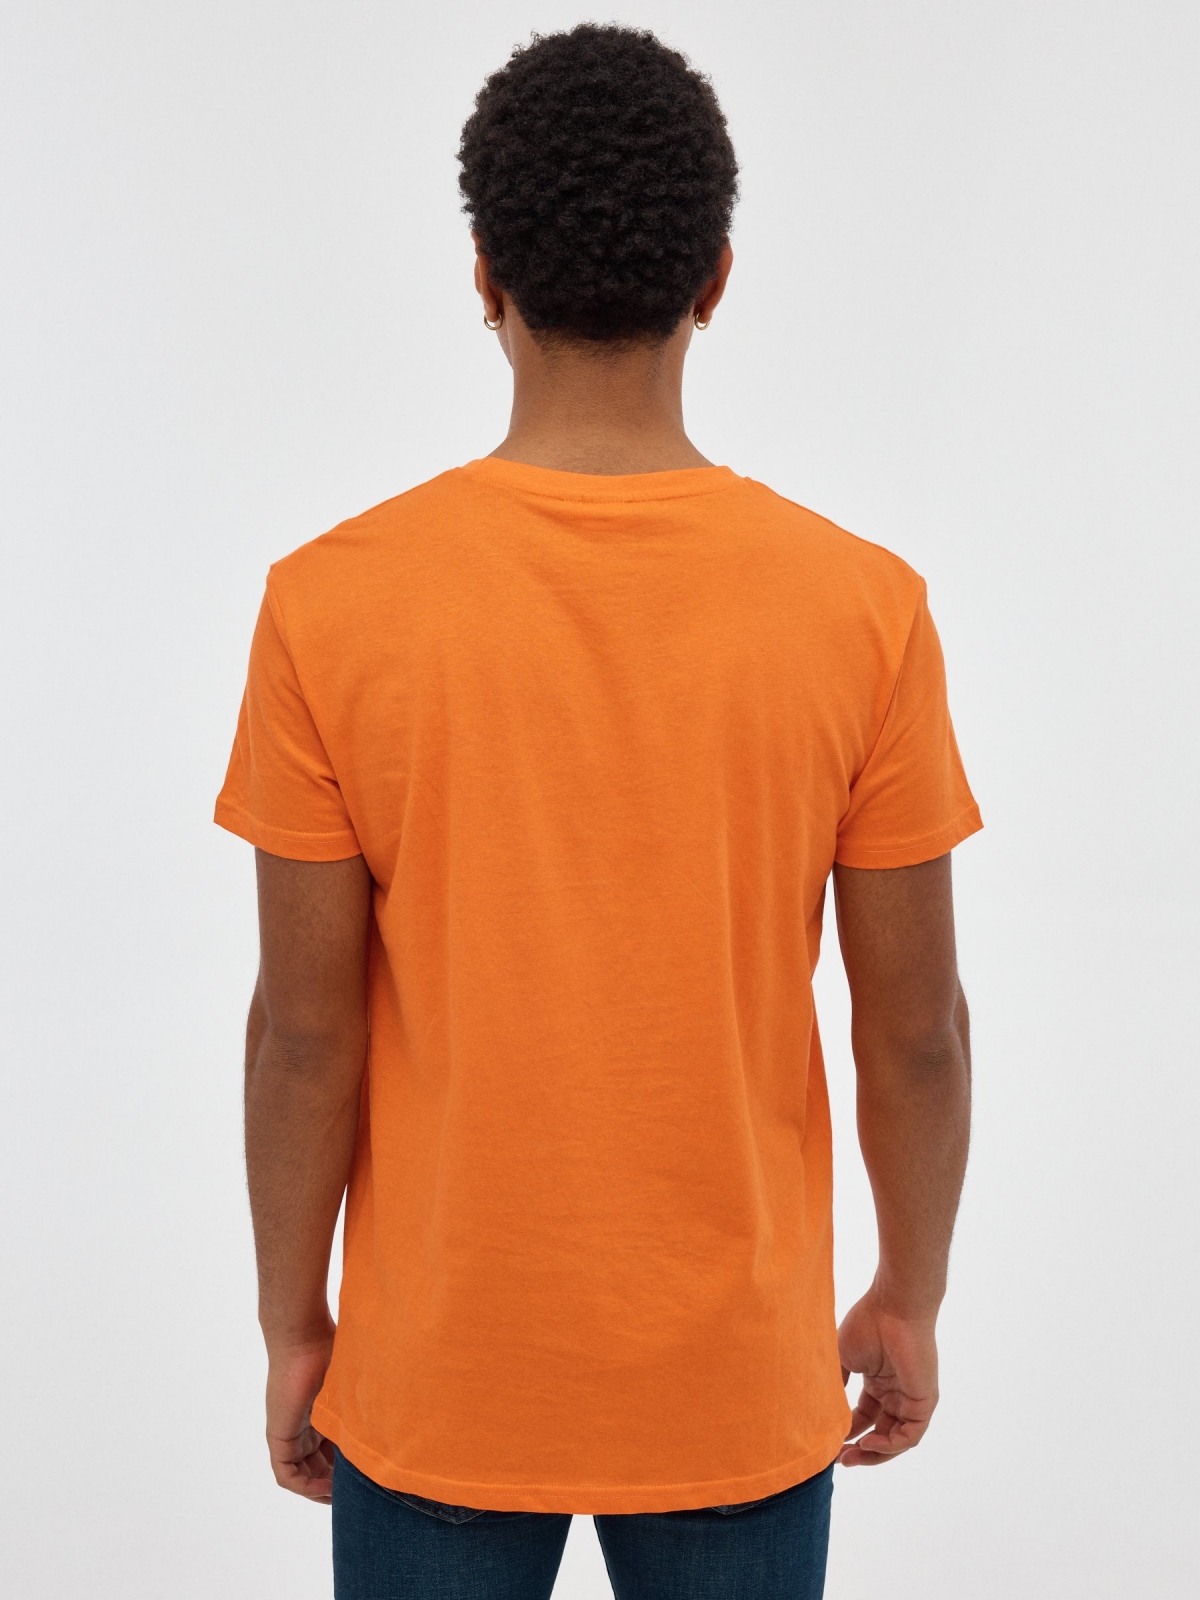 Dragon Ball orange T-shirt orange middle back view